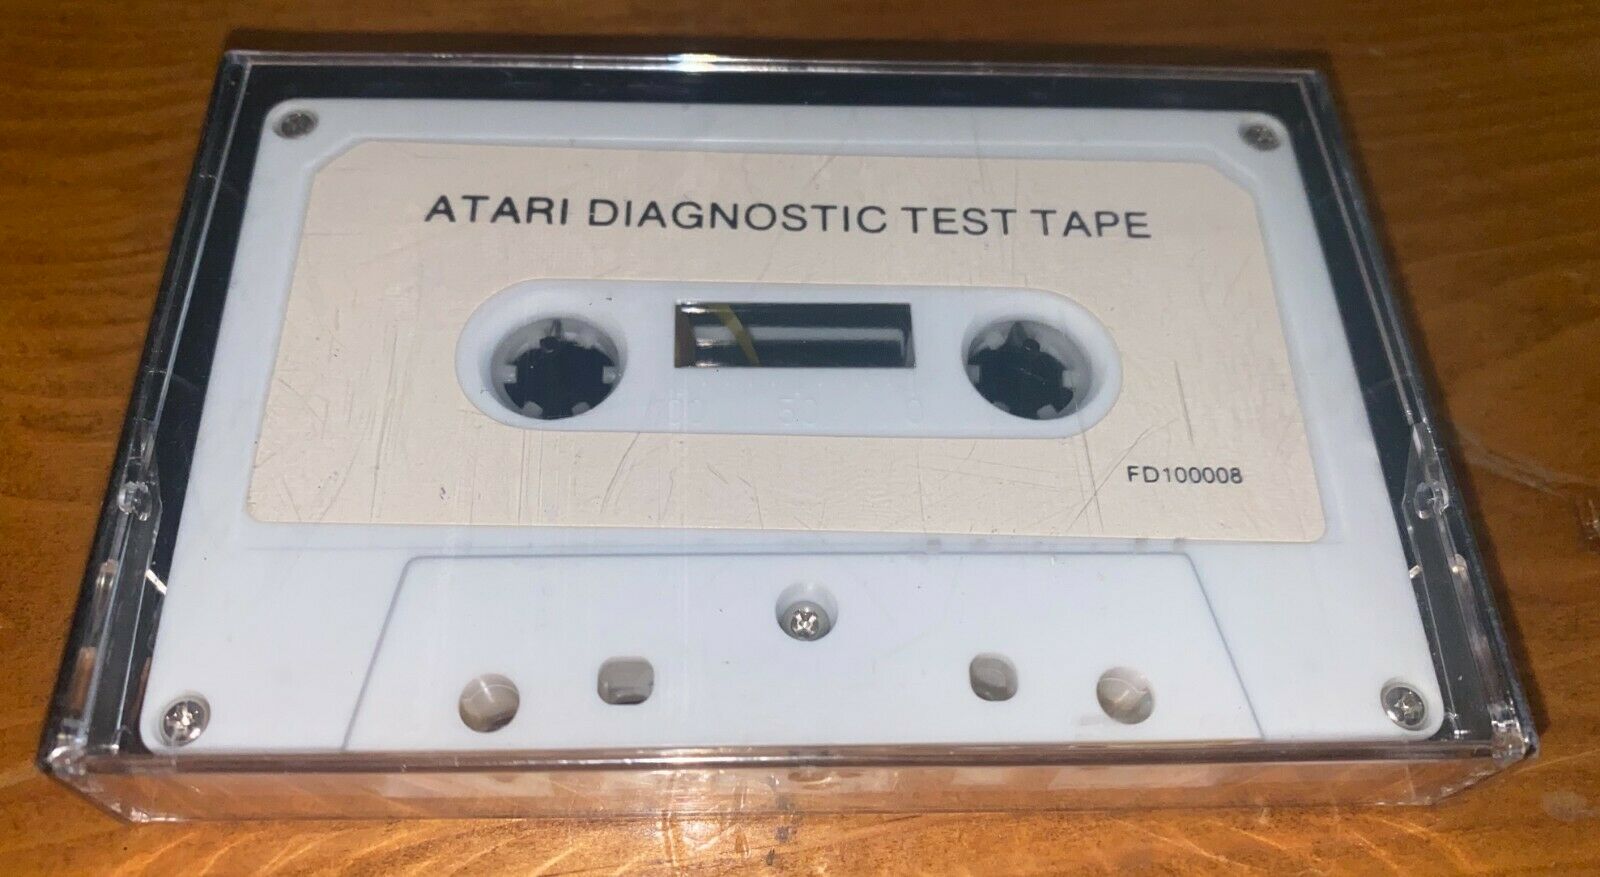 ATARI Diagnostic Test Tape/Bild1.jpg